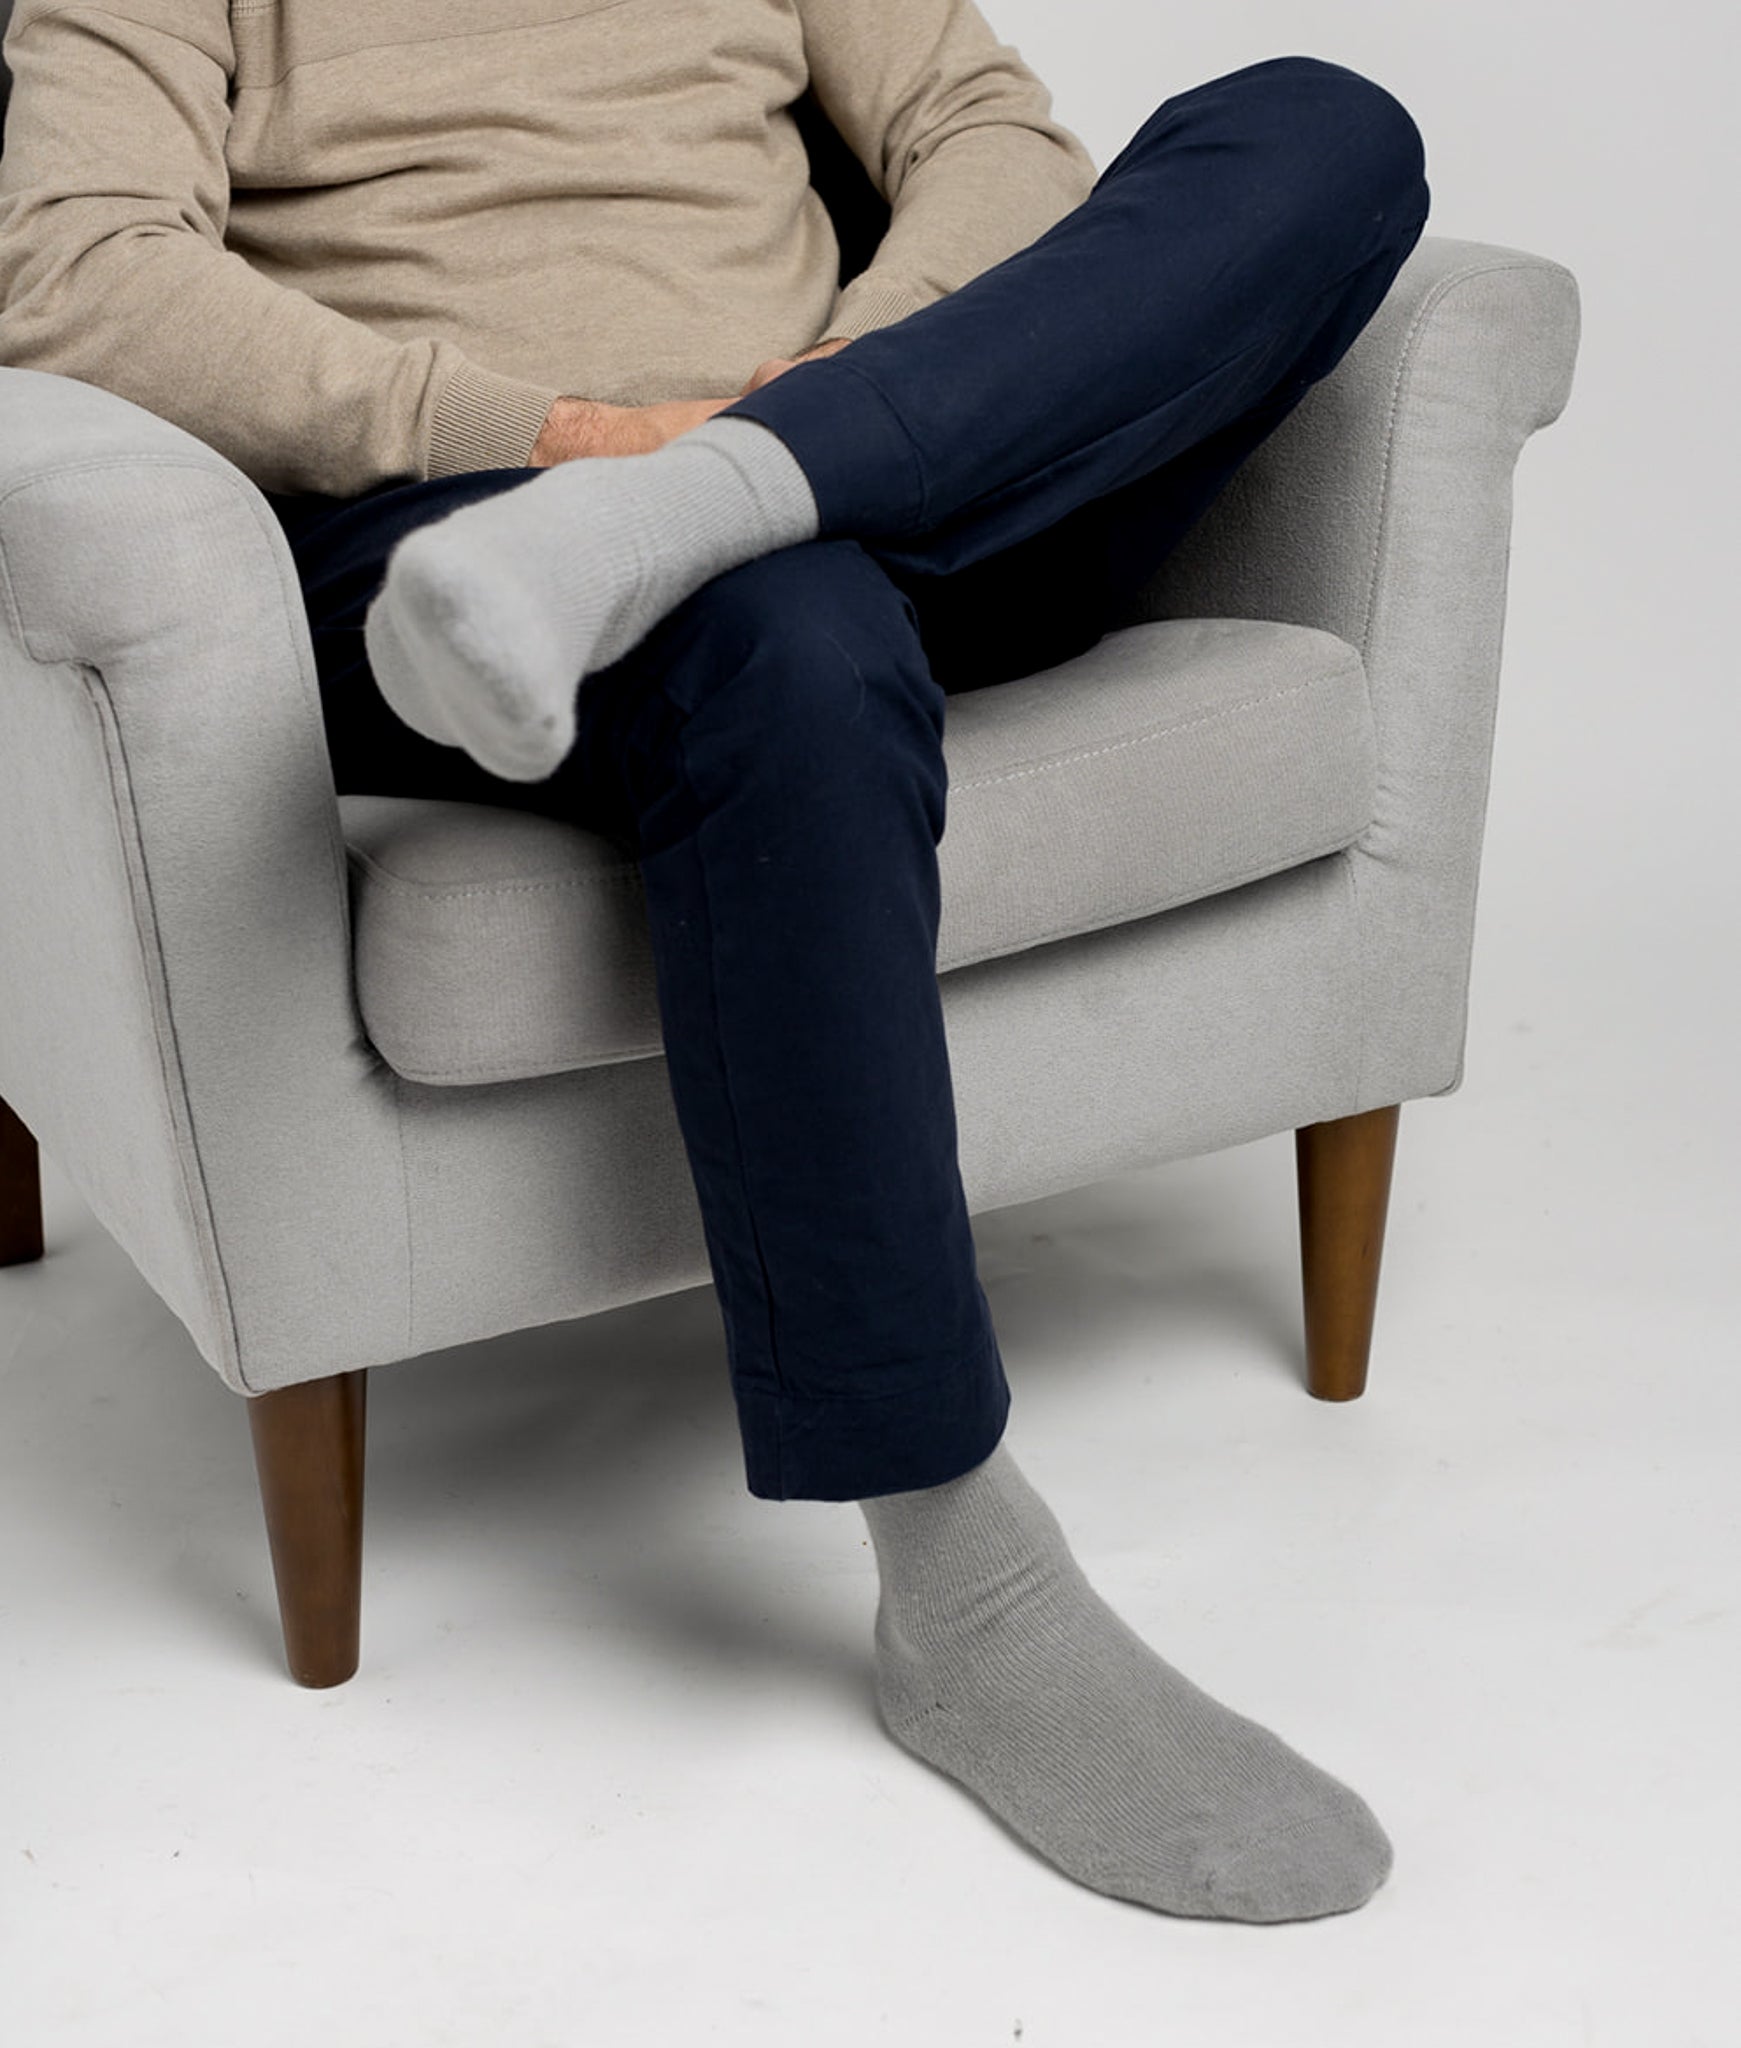 nooan Possum Merino Wool Socks | Comfortable & Sustainable Fashion ...